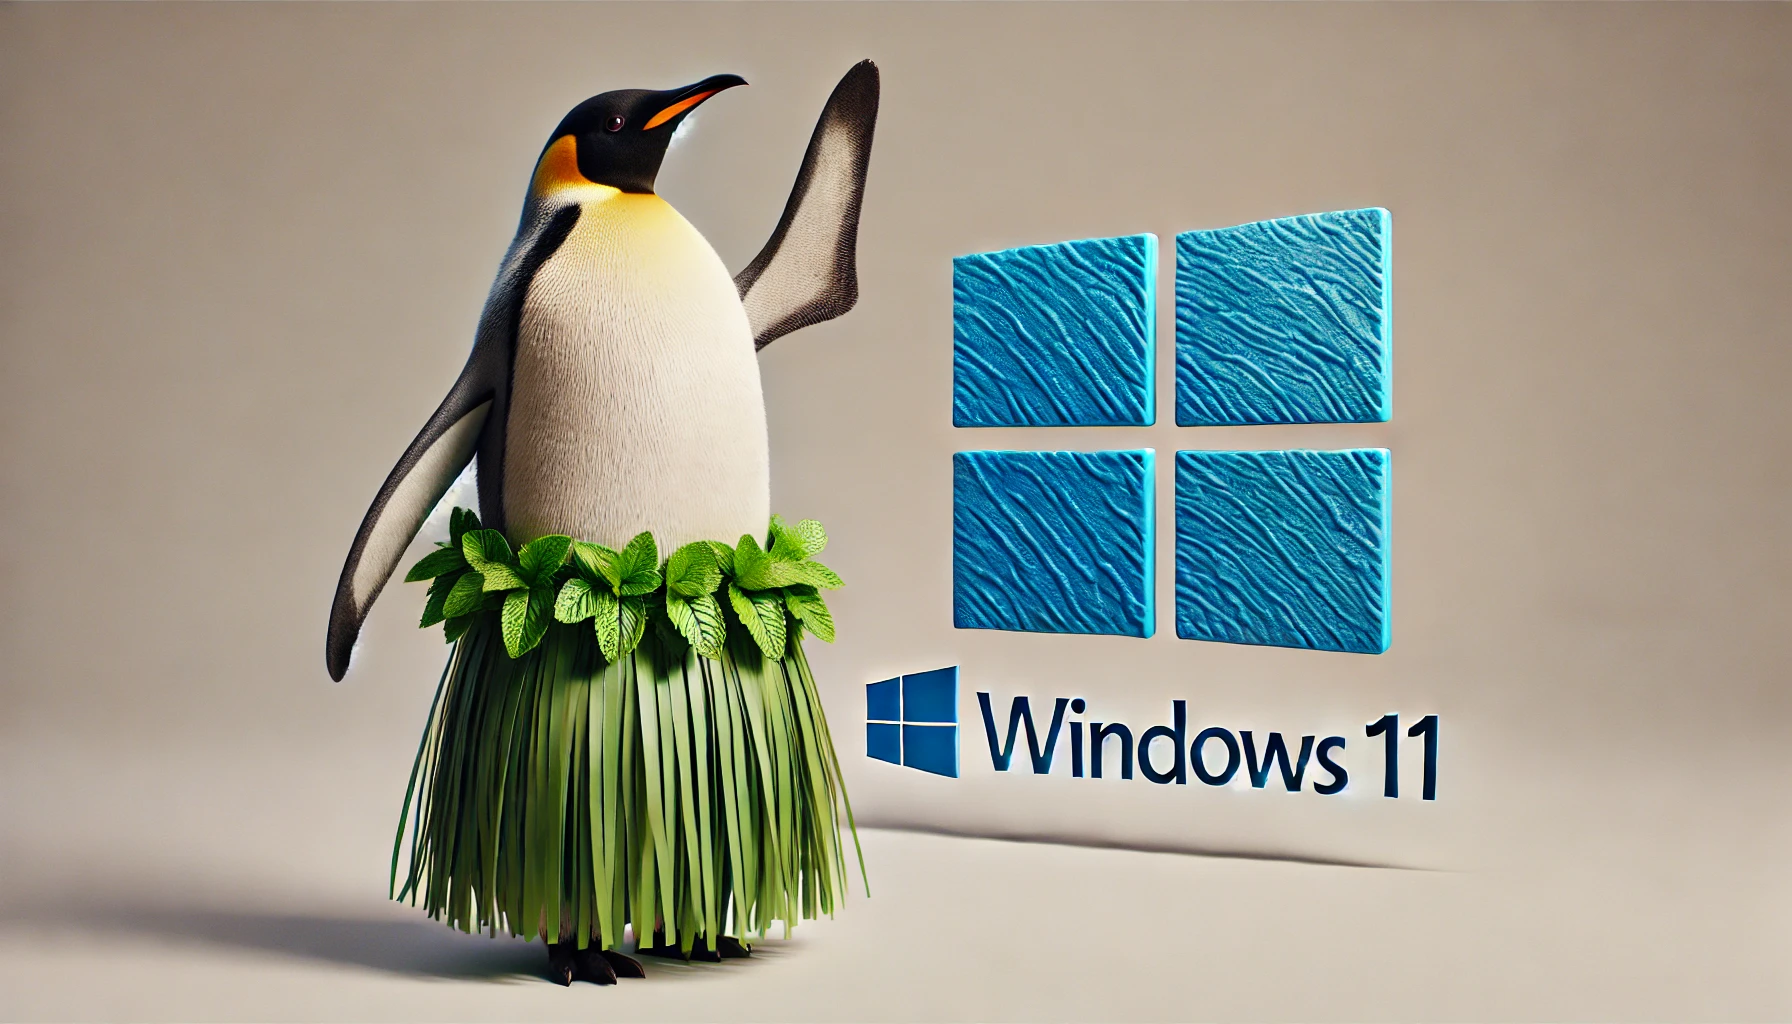 Farewell Microsoft Windows 11, and welcome Ubuntu-based Linux Mint 22!